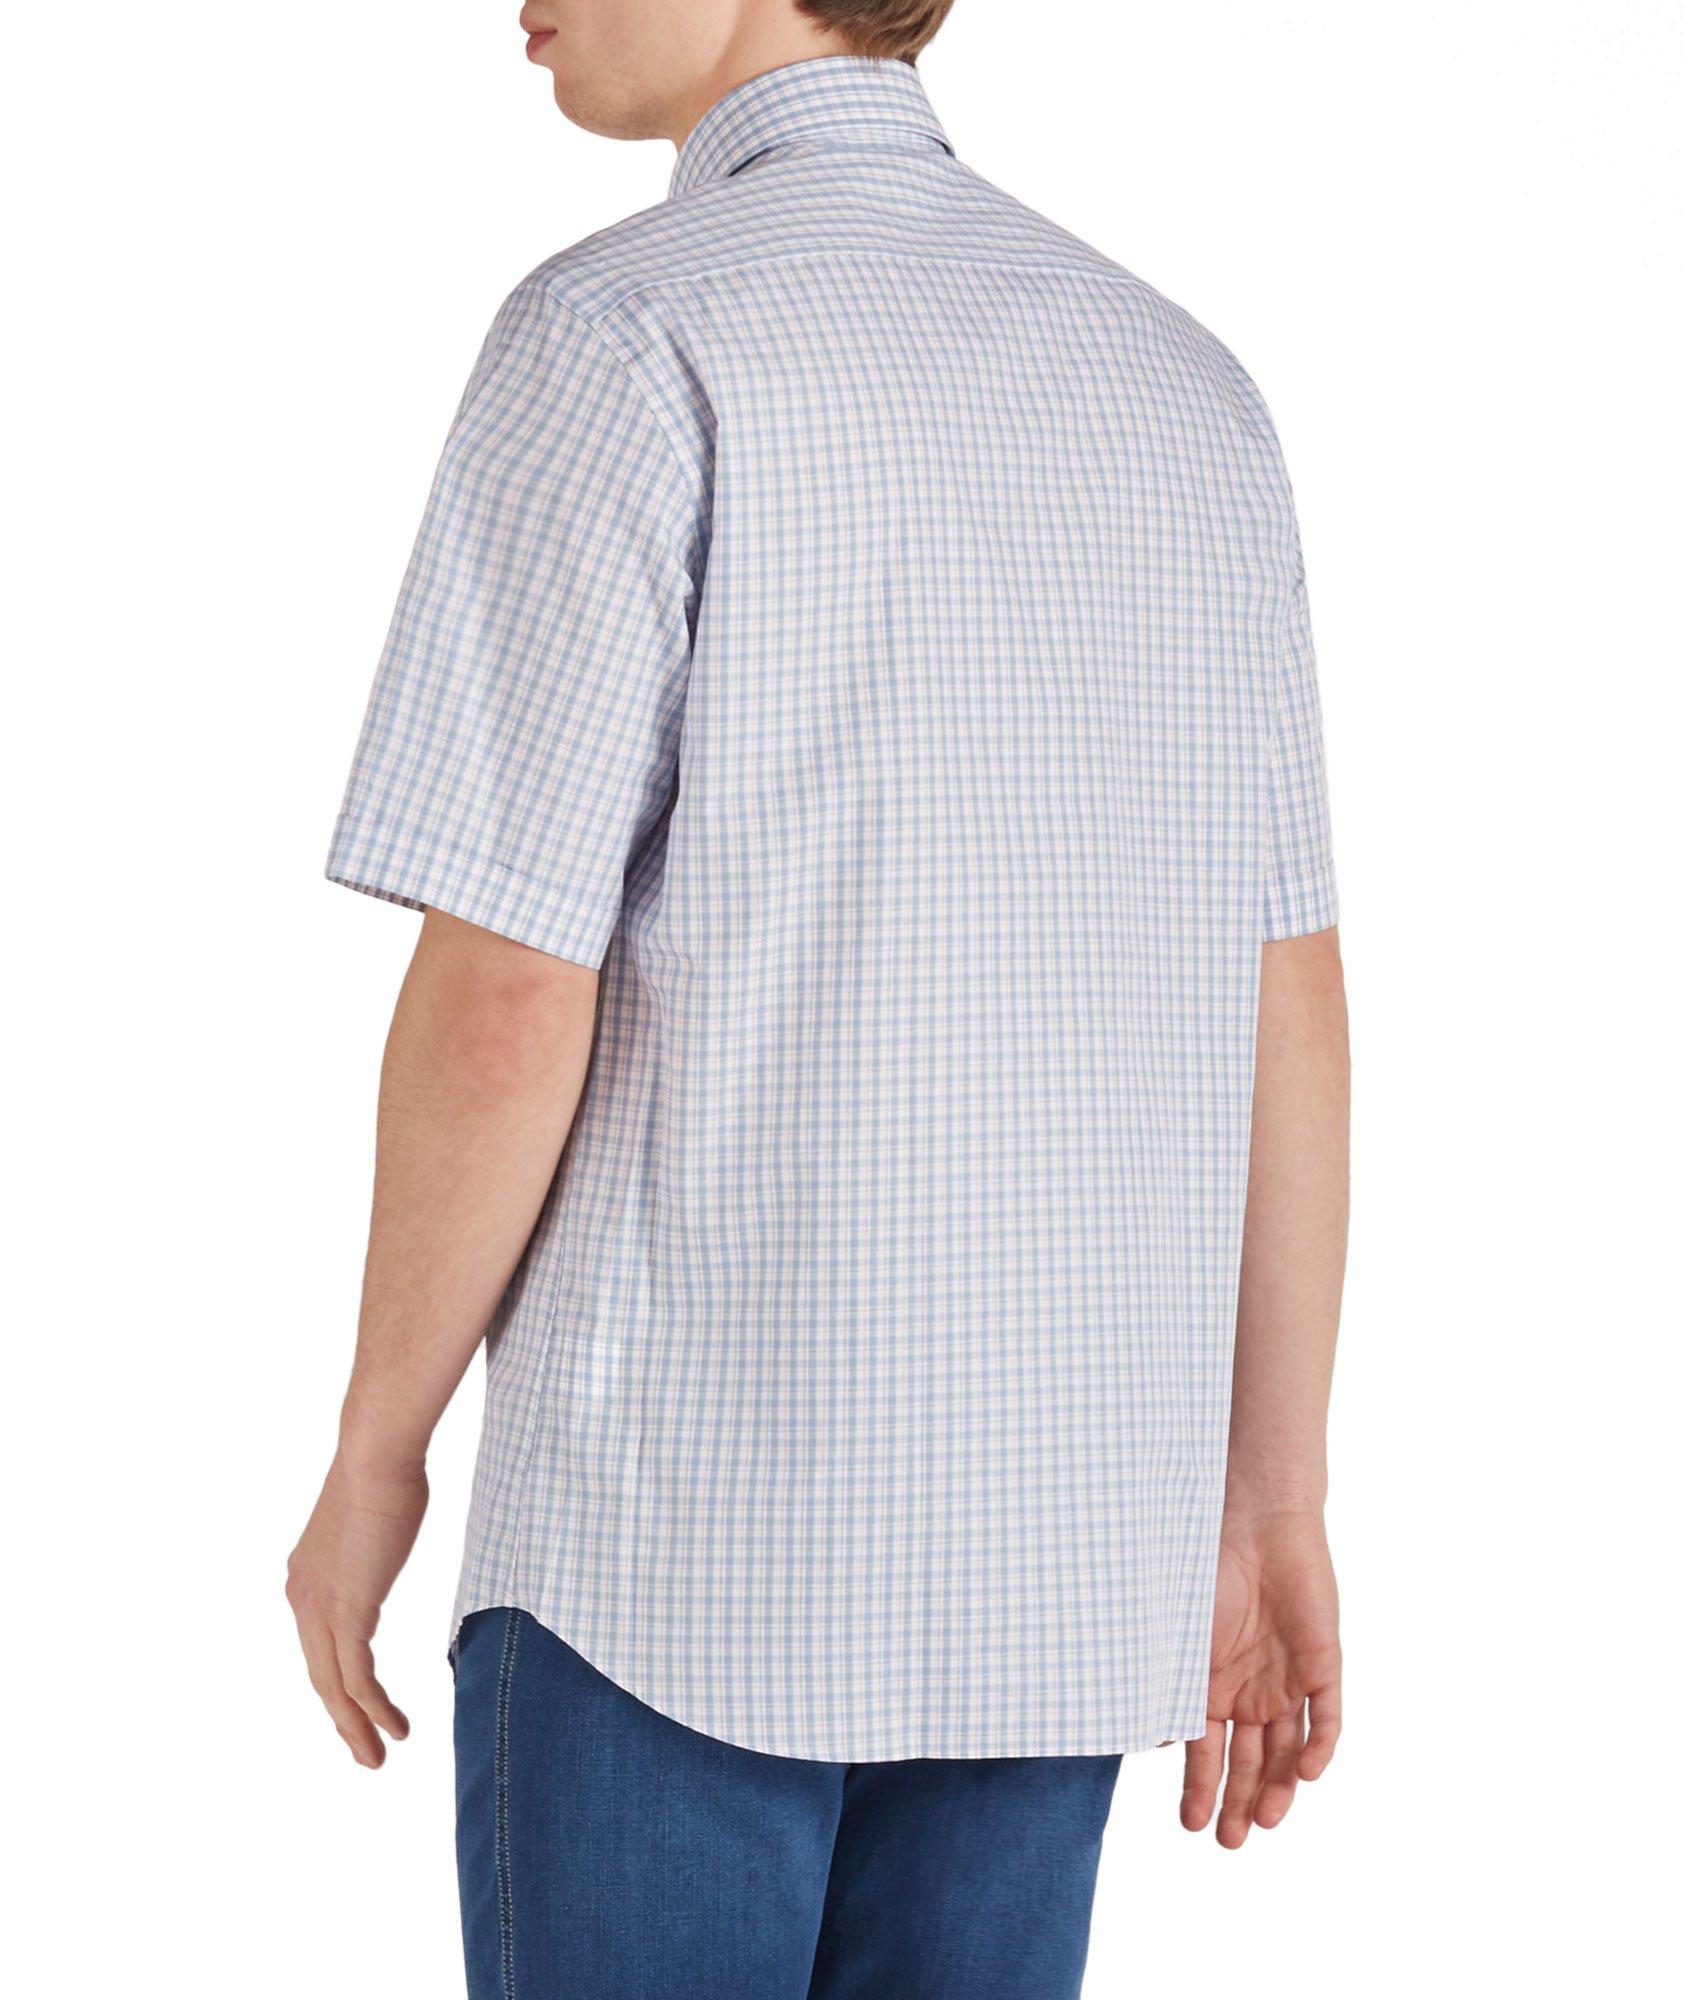 Short-Sleeve Checked Cotton Shirt image 1